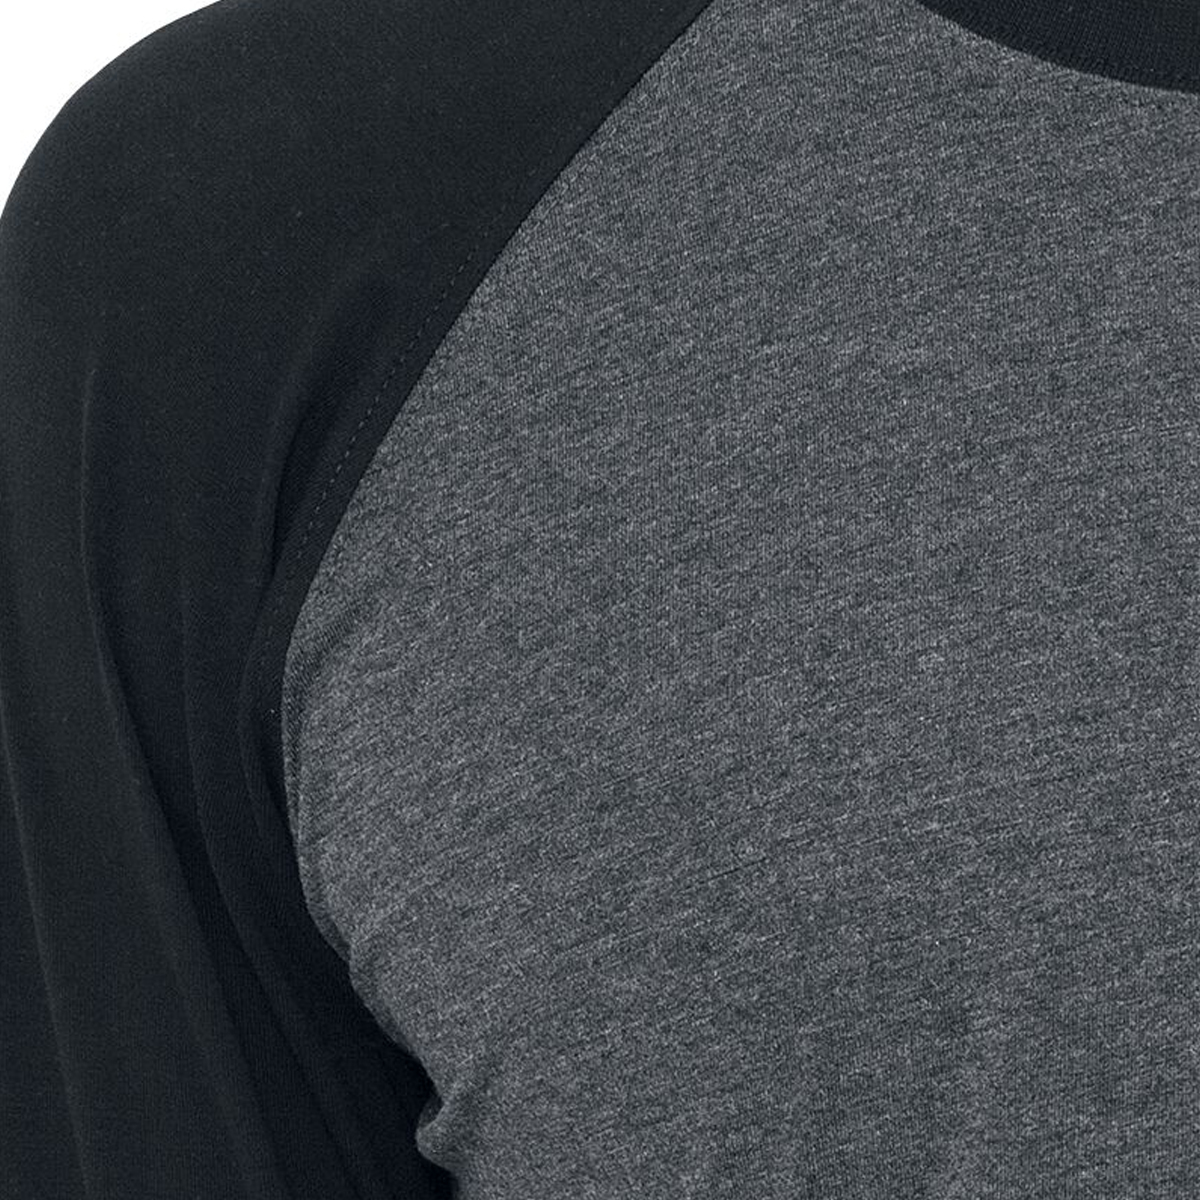 Black & Grey Raglan T-Shirt